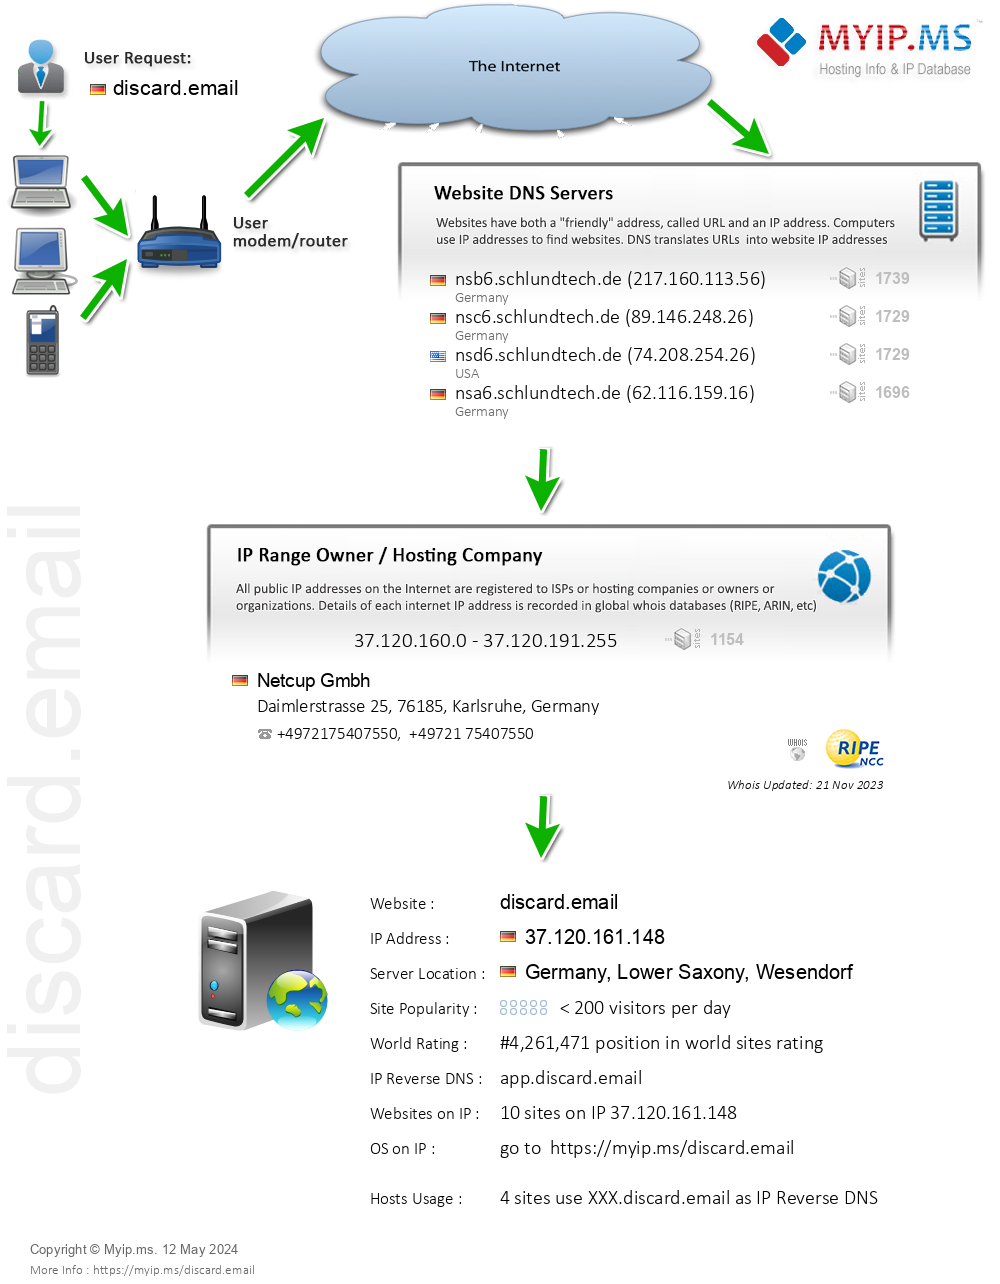 Discard.email - Website Hosting Visual IP Diagram